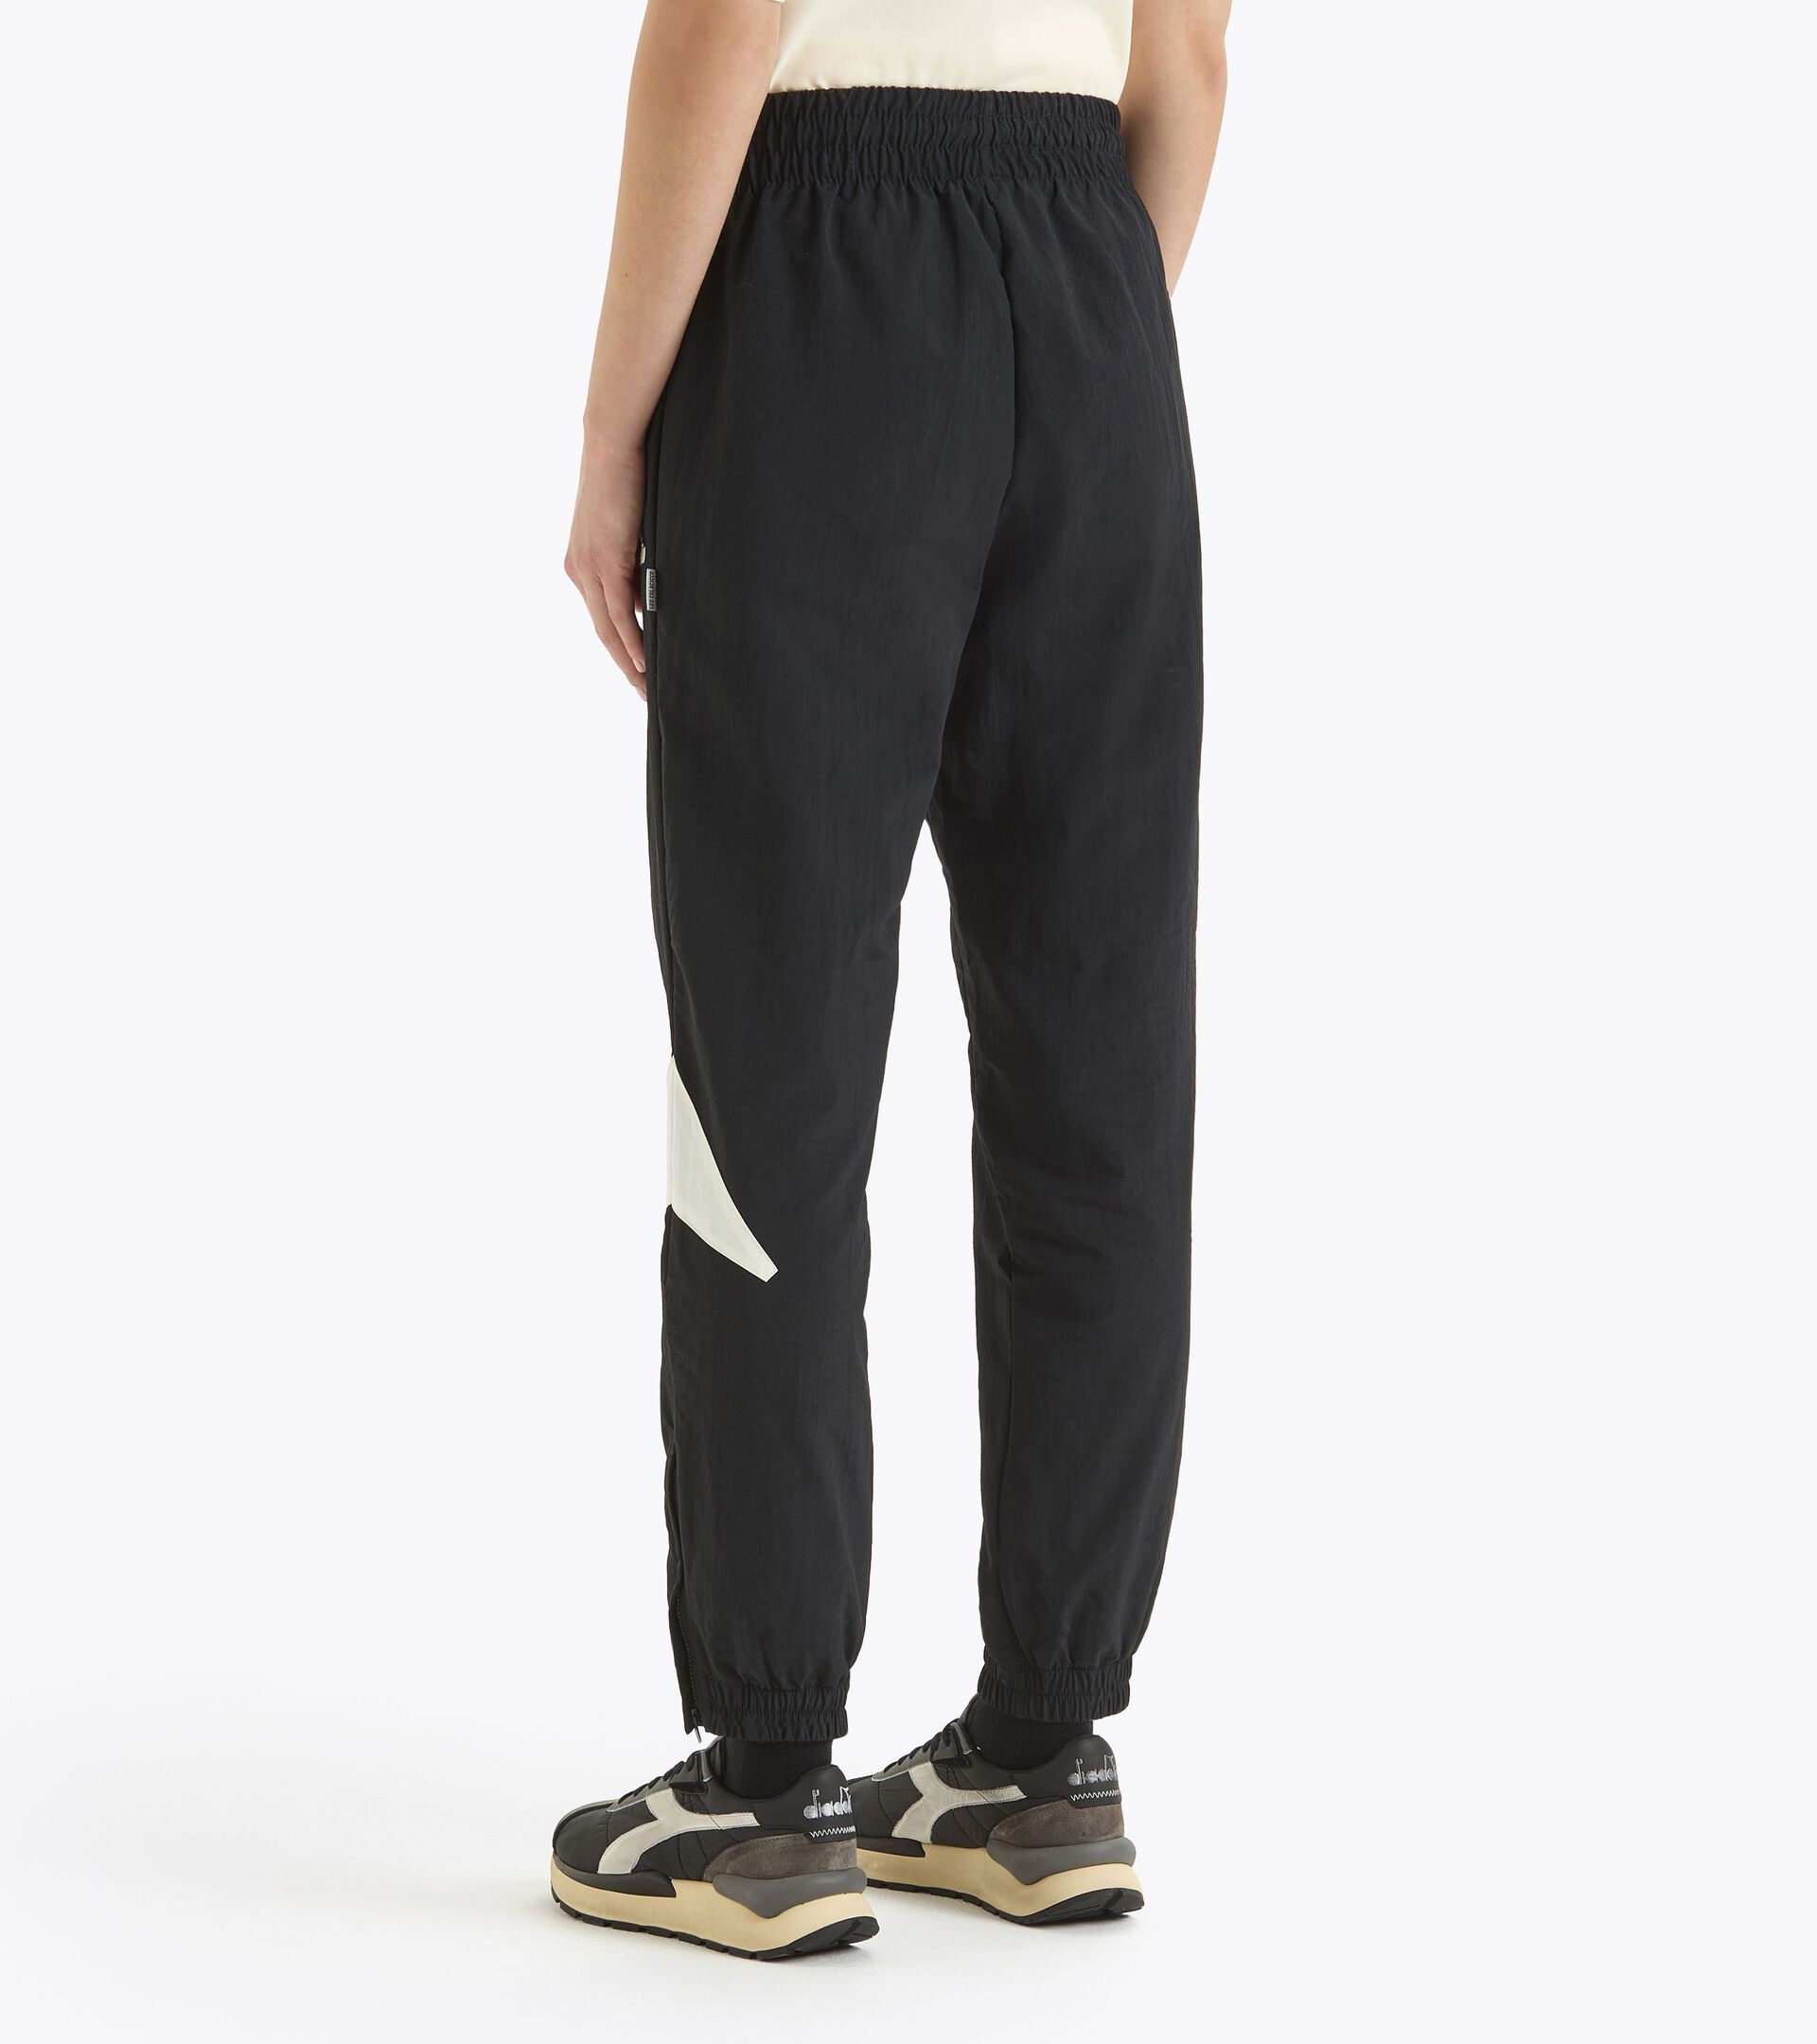 Pantalon de sport - Made in Italy - Genre neutre TRACK PANTS LEGACY NOIR - Diadora